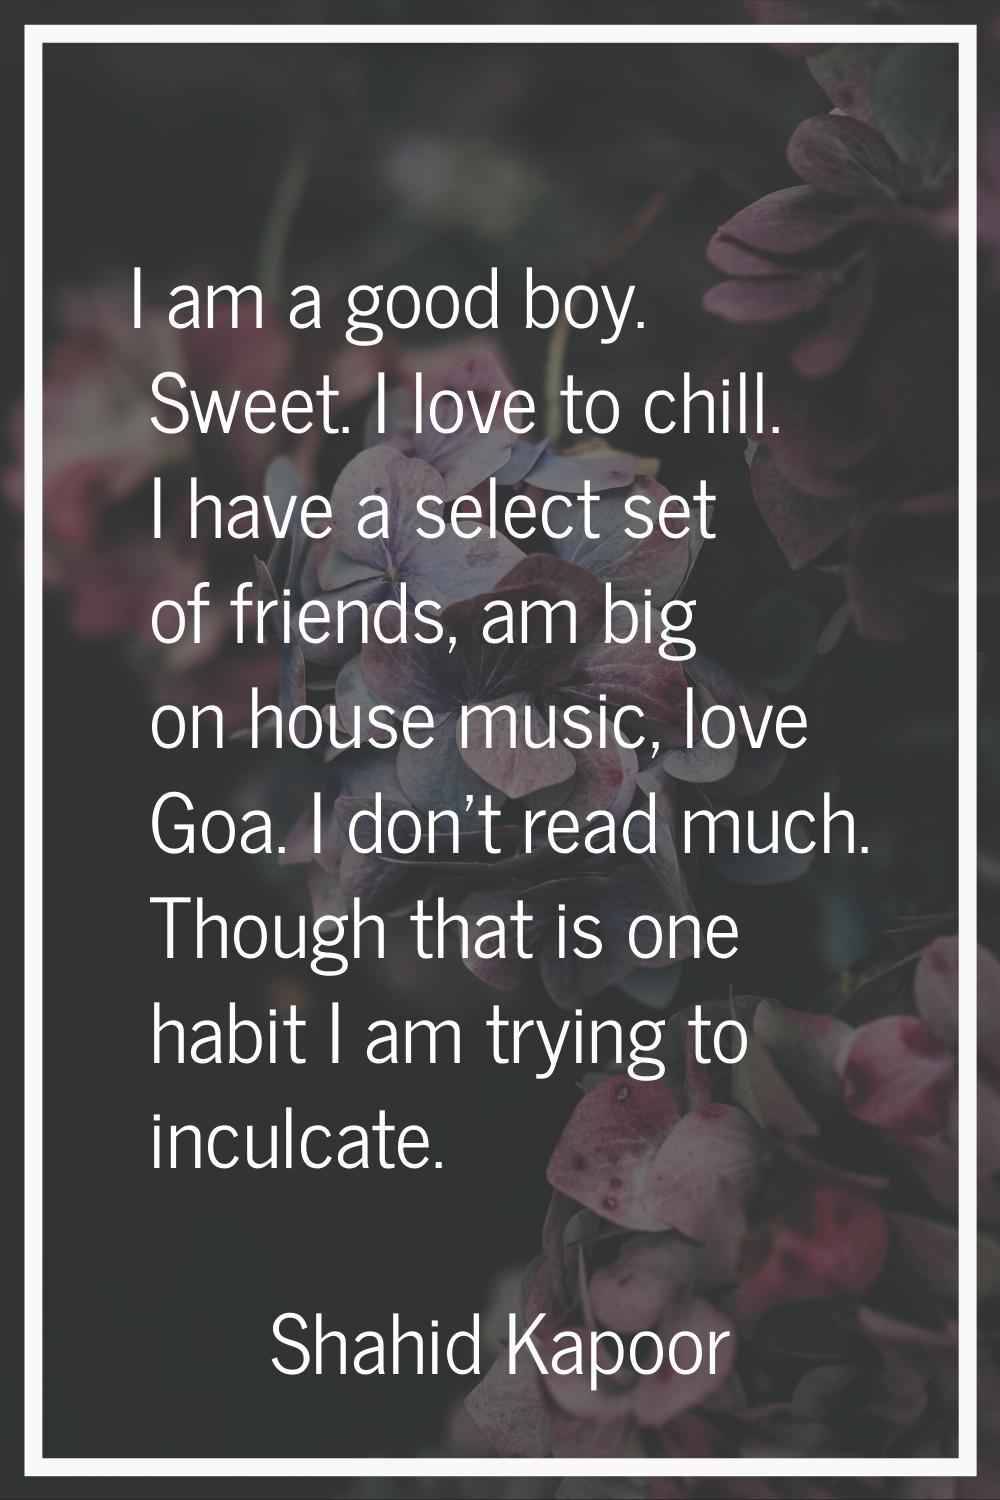 I am a good boy. Sweet. I love to chill. I have a select set of friends, am big on house music, lov